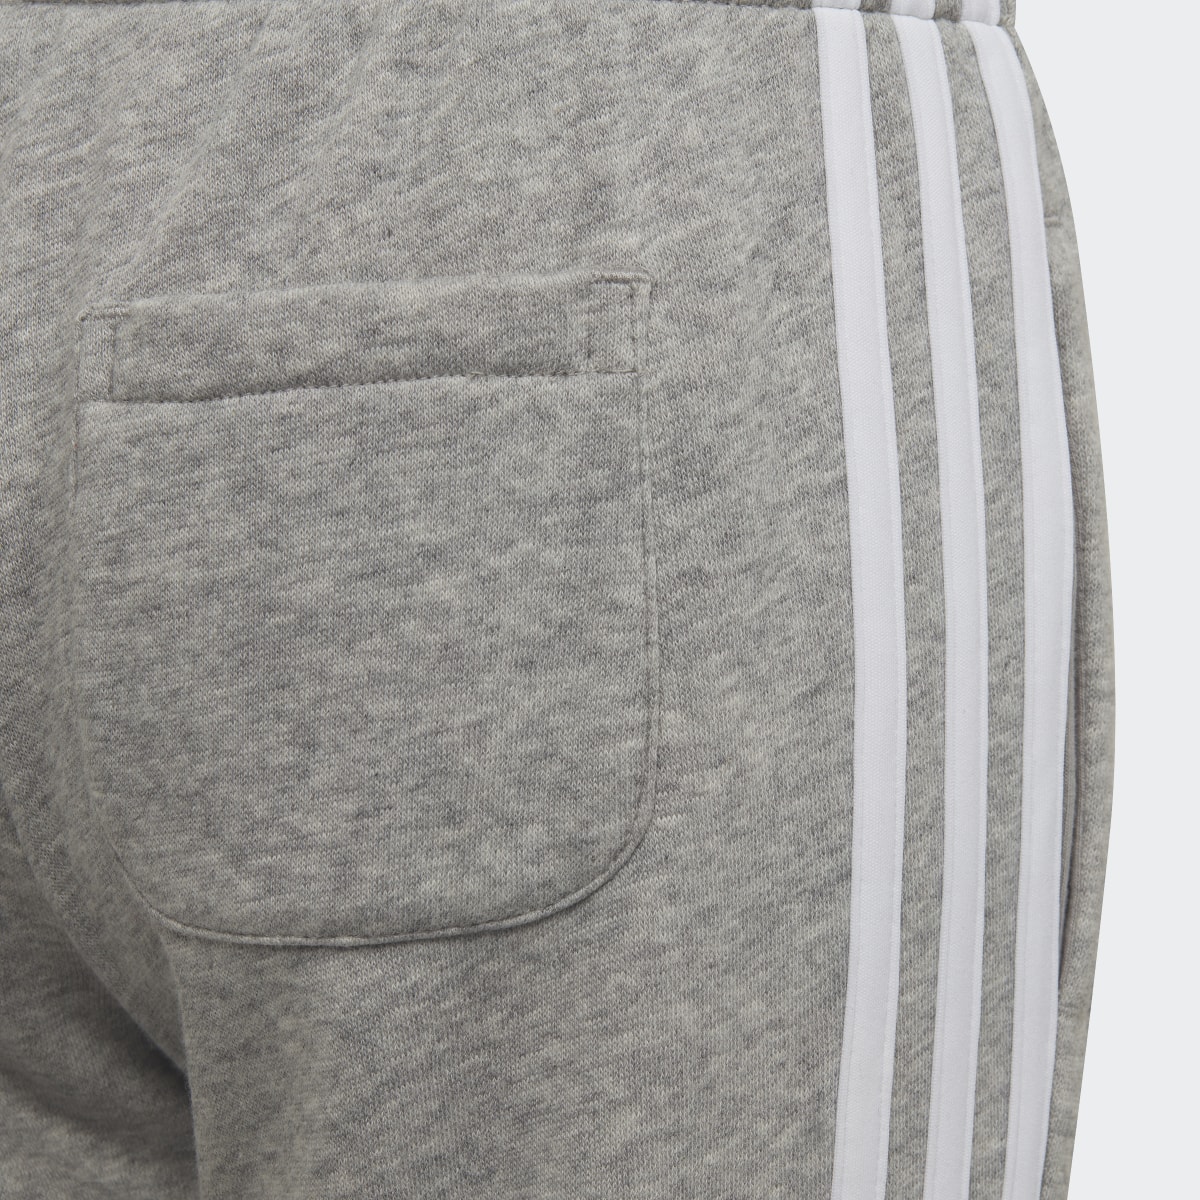 Adidas Essentials 3-Stripes Pants. 5